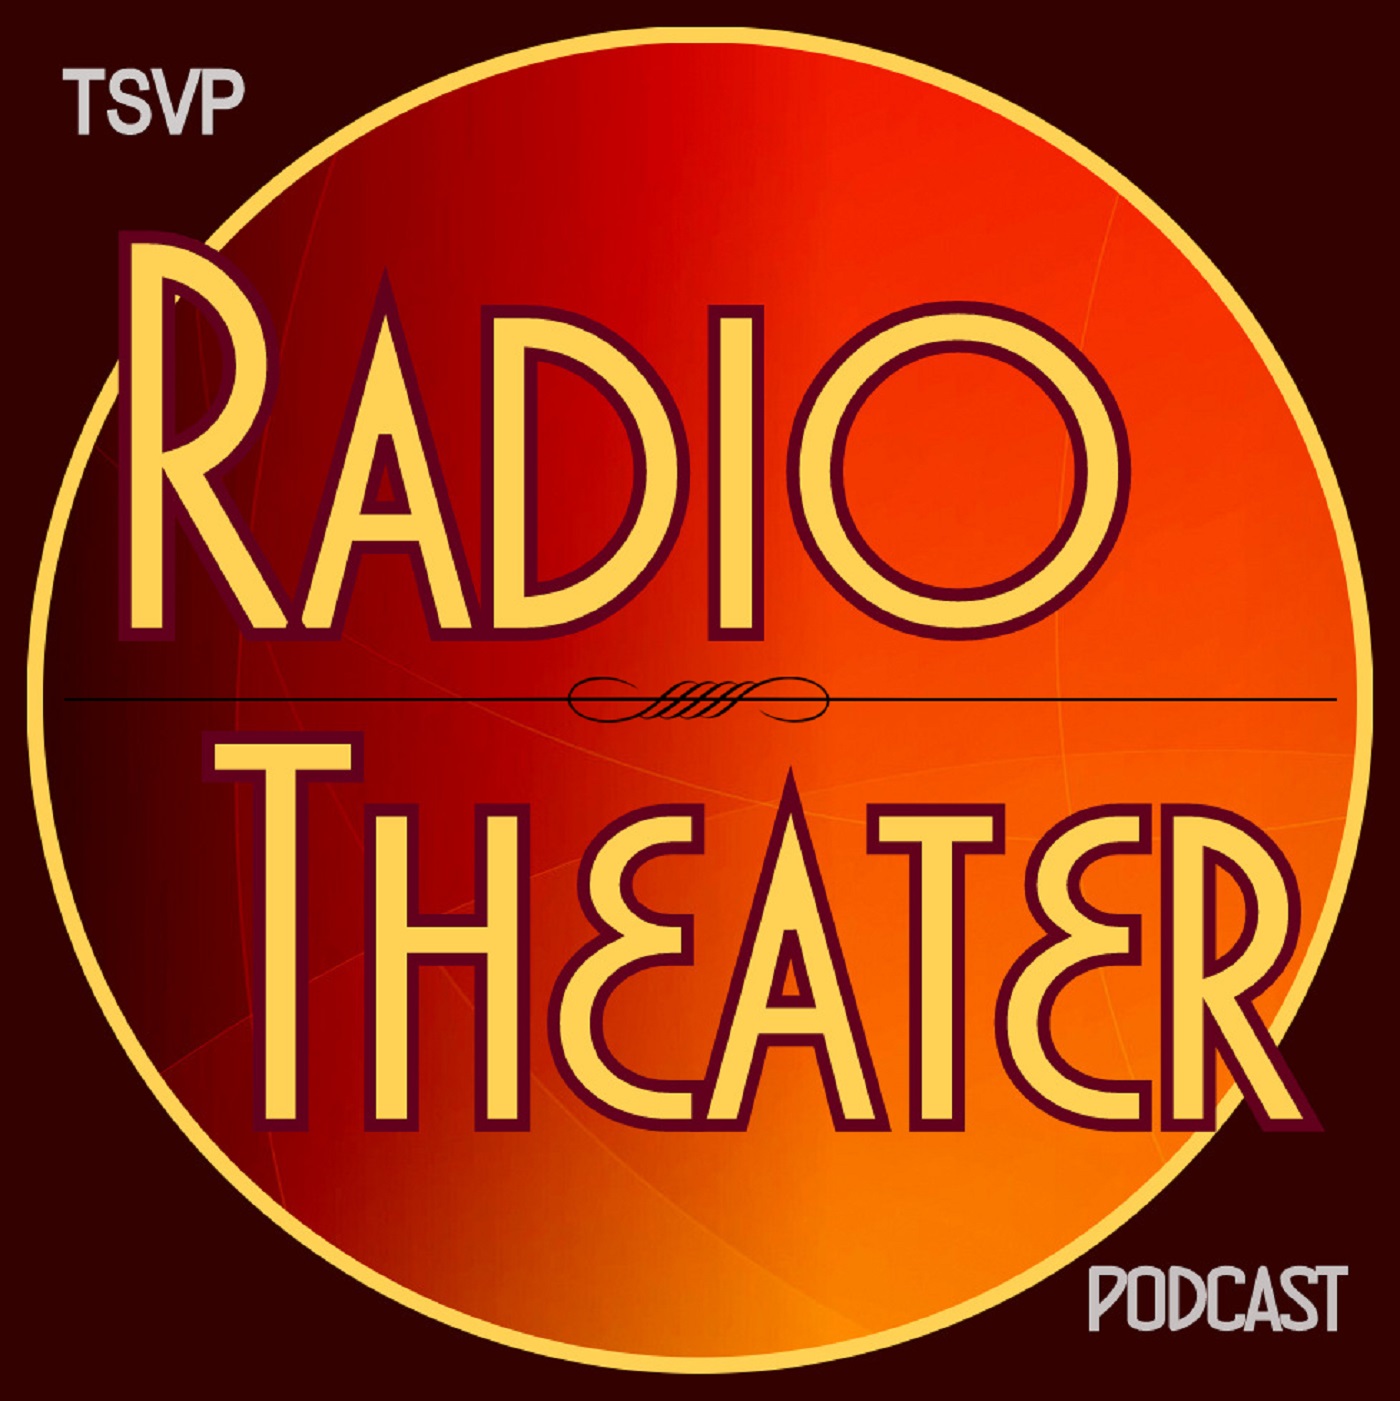 TSVP Radio Theater Podcast